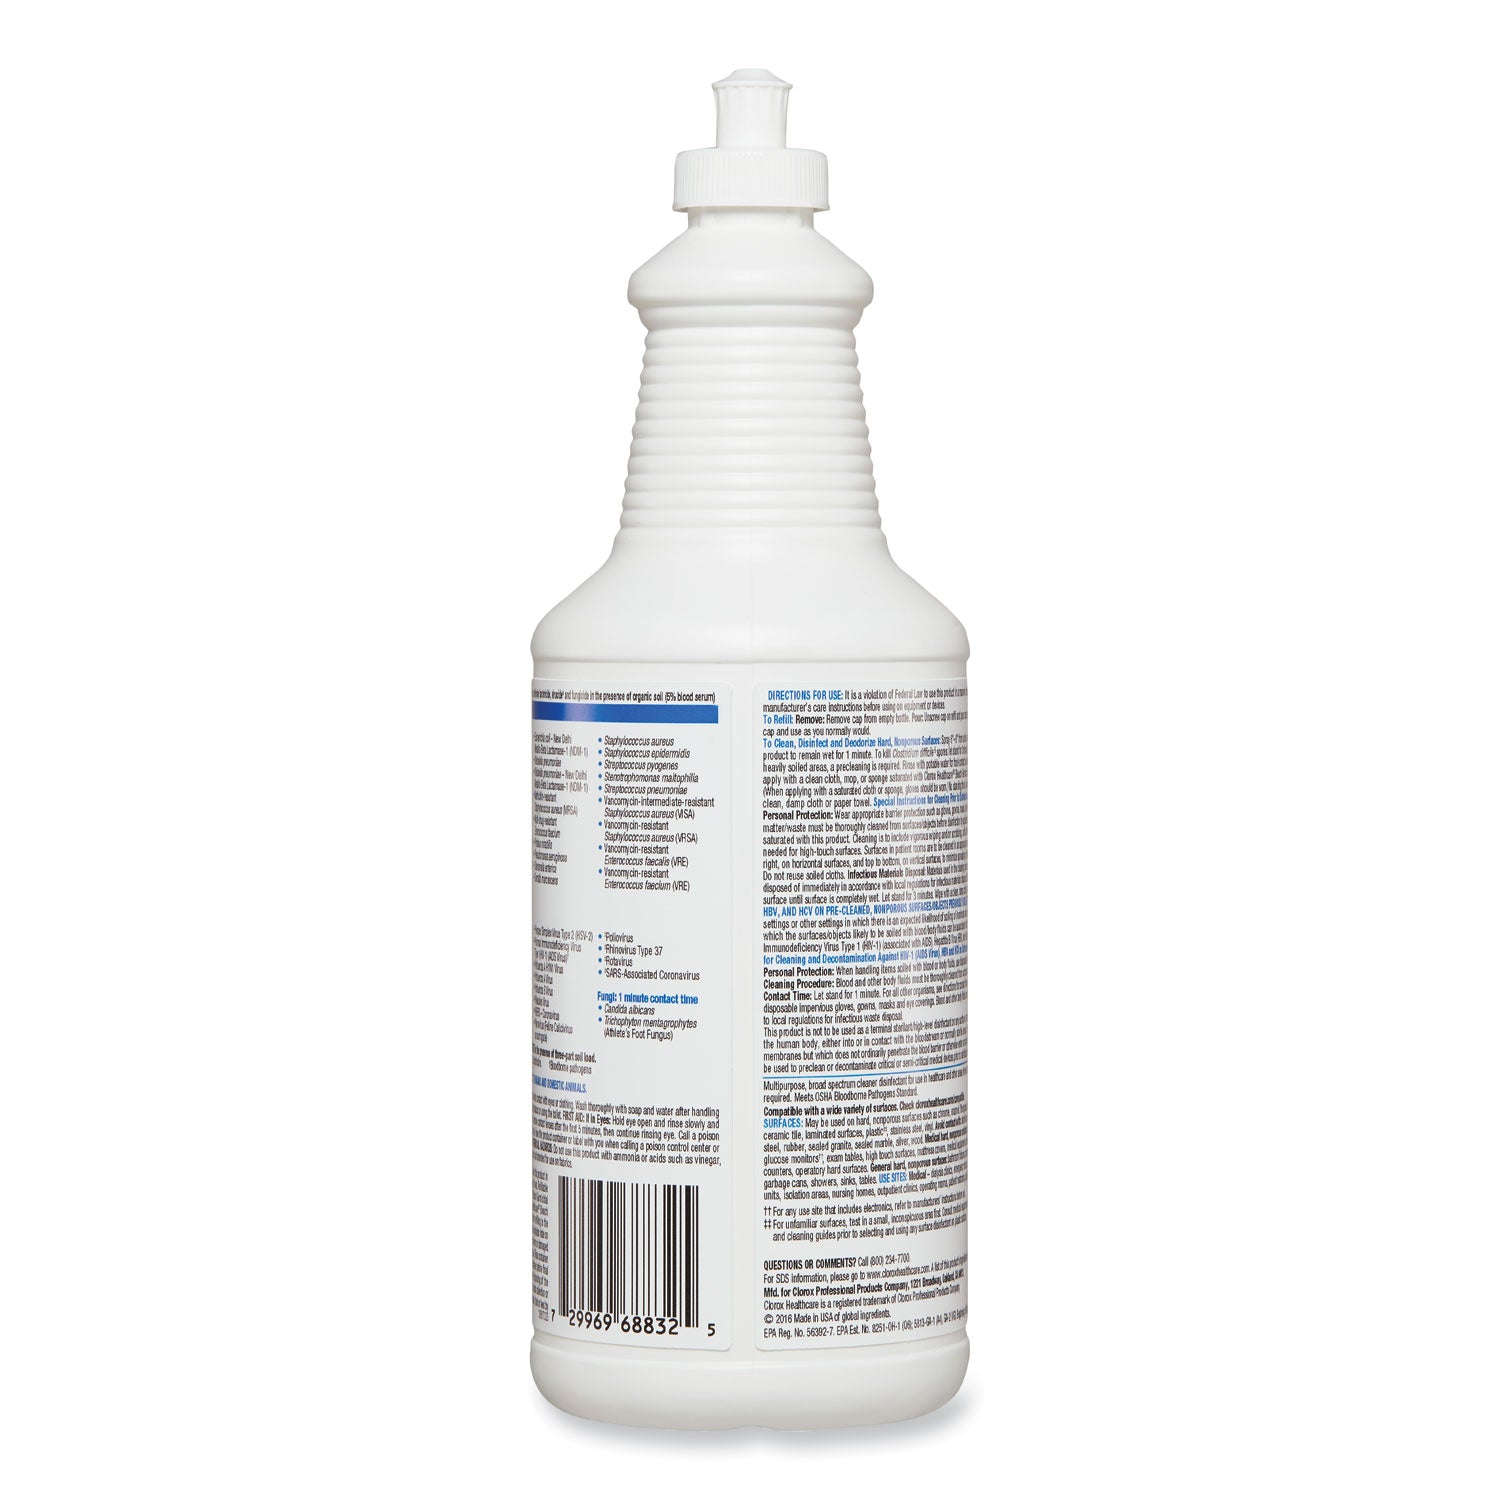 Bleach Germicidal Cleaner, 32 oz Pull-Top Bottle, 6/Carton - 